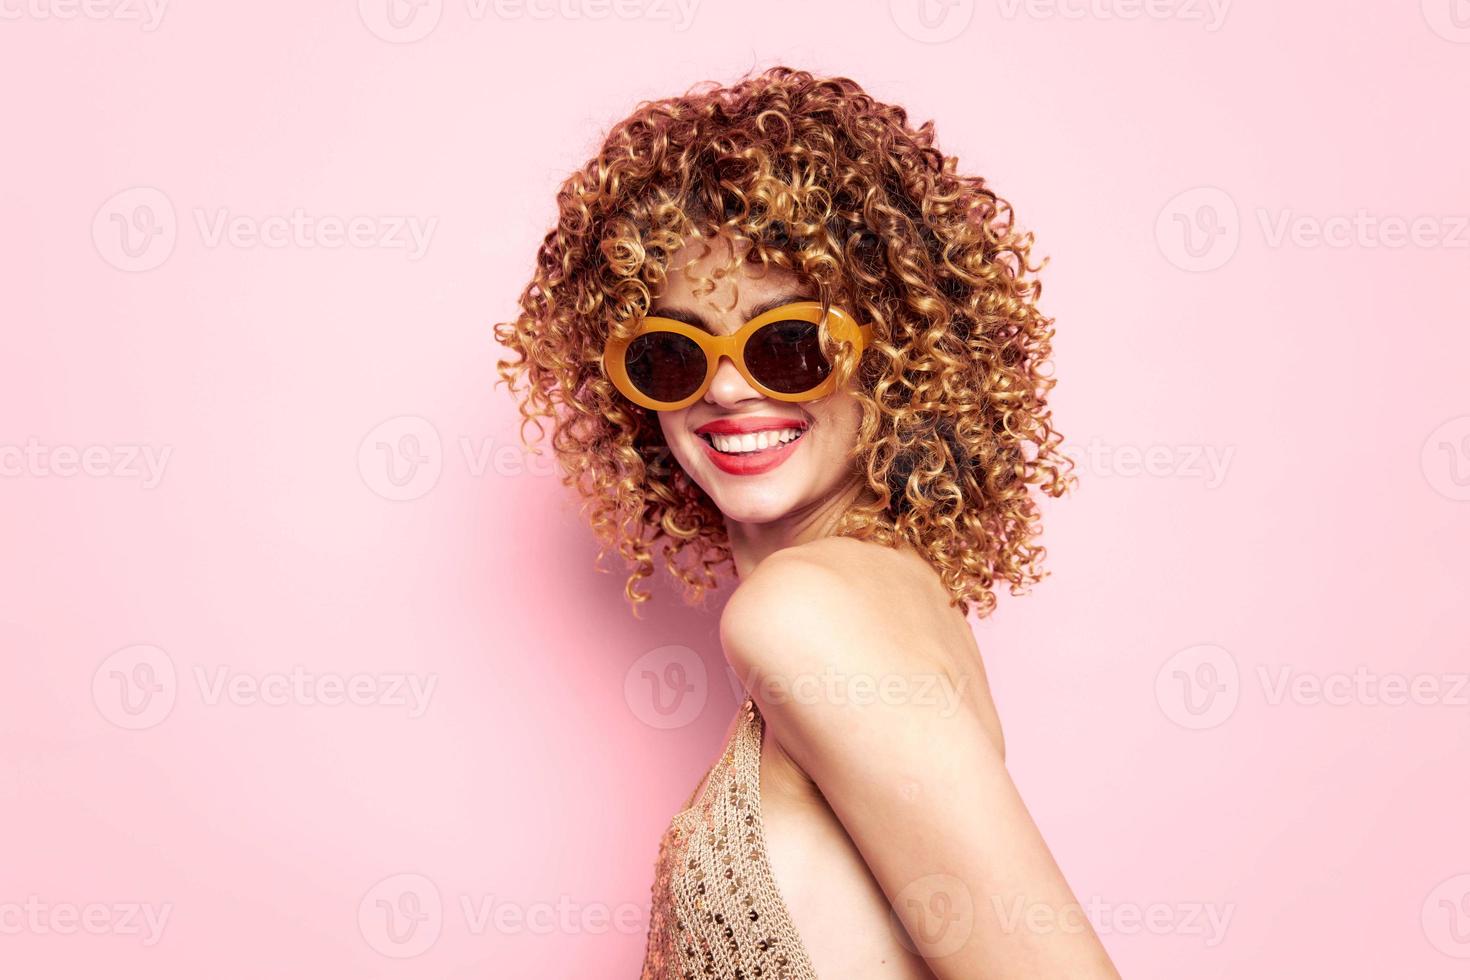 bonito mujer lentes con amarillo marcos hermosa sonrisa Moda ropa aislado antecedentes foto